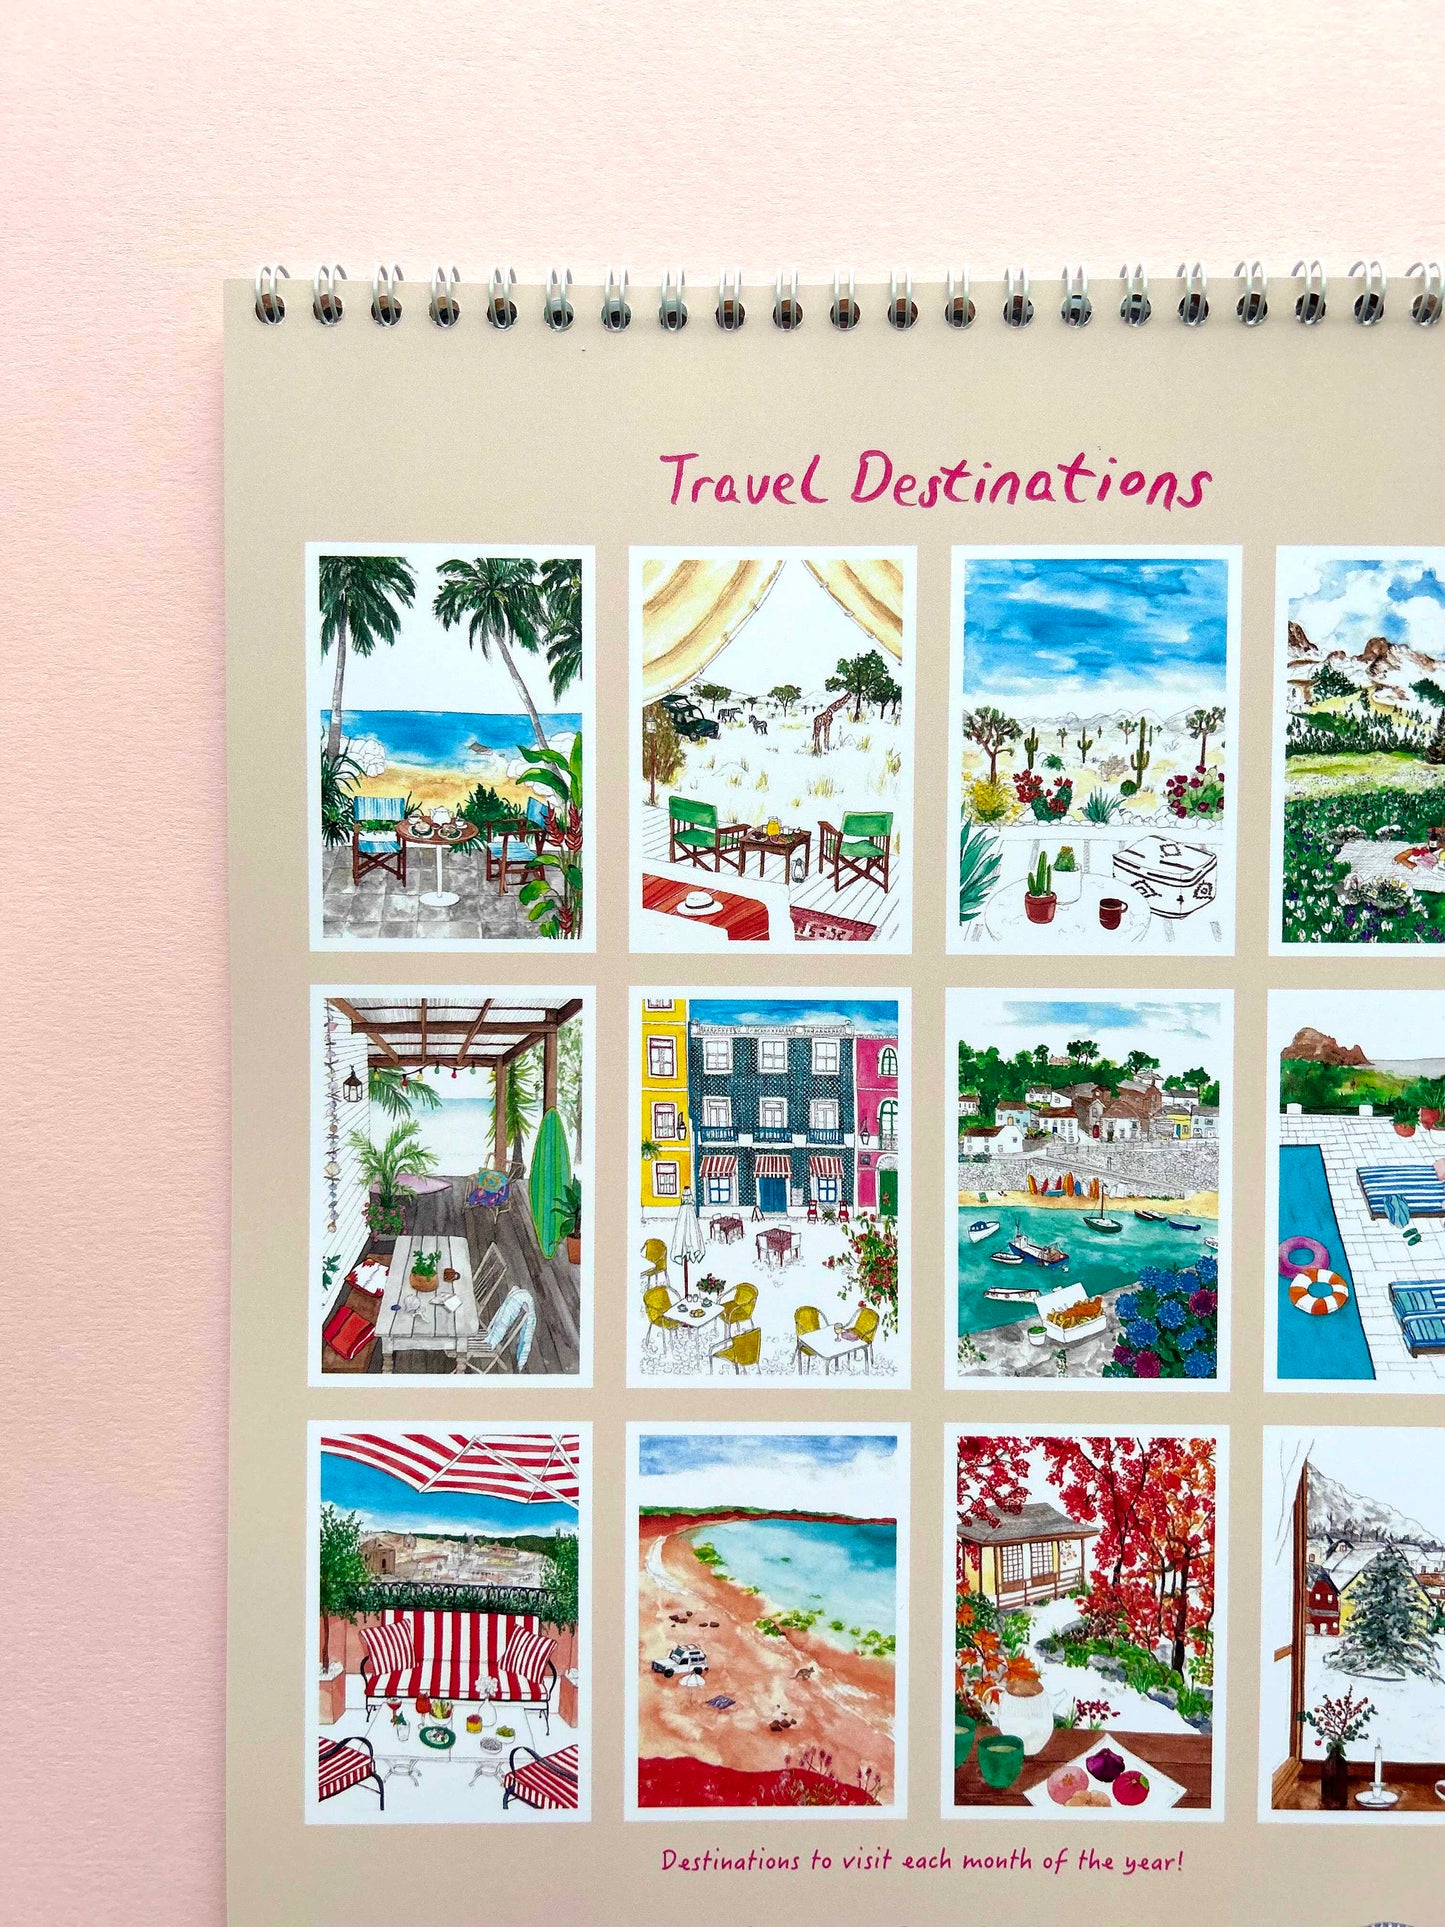 2024 Travel Destinations Calendar